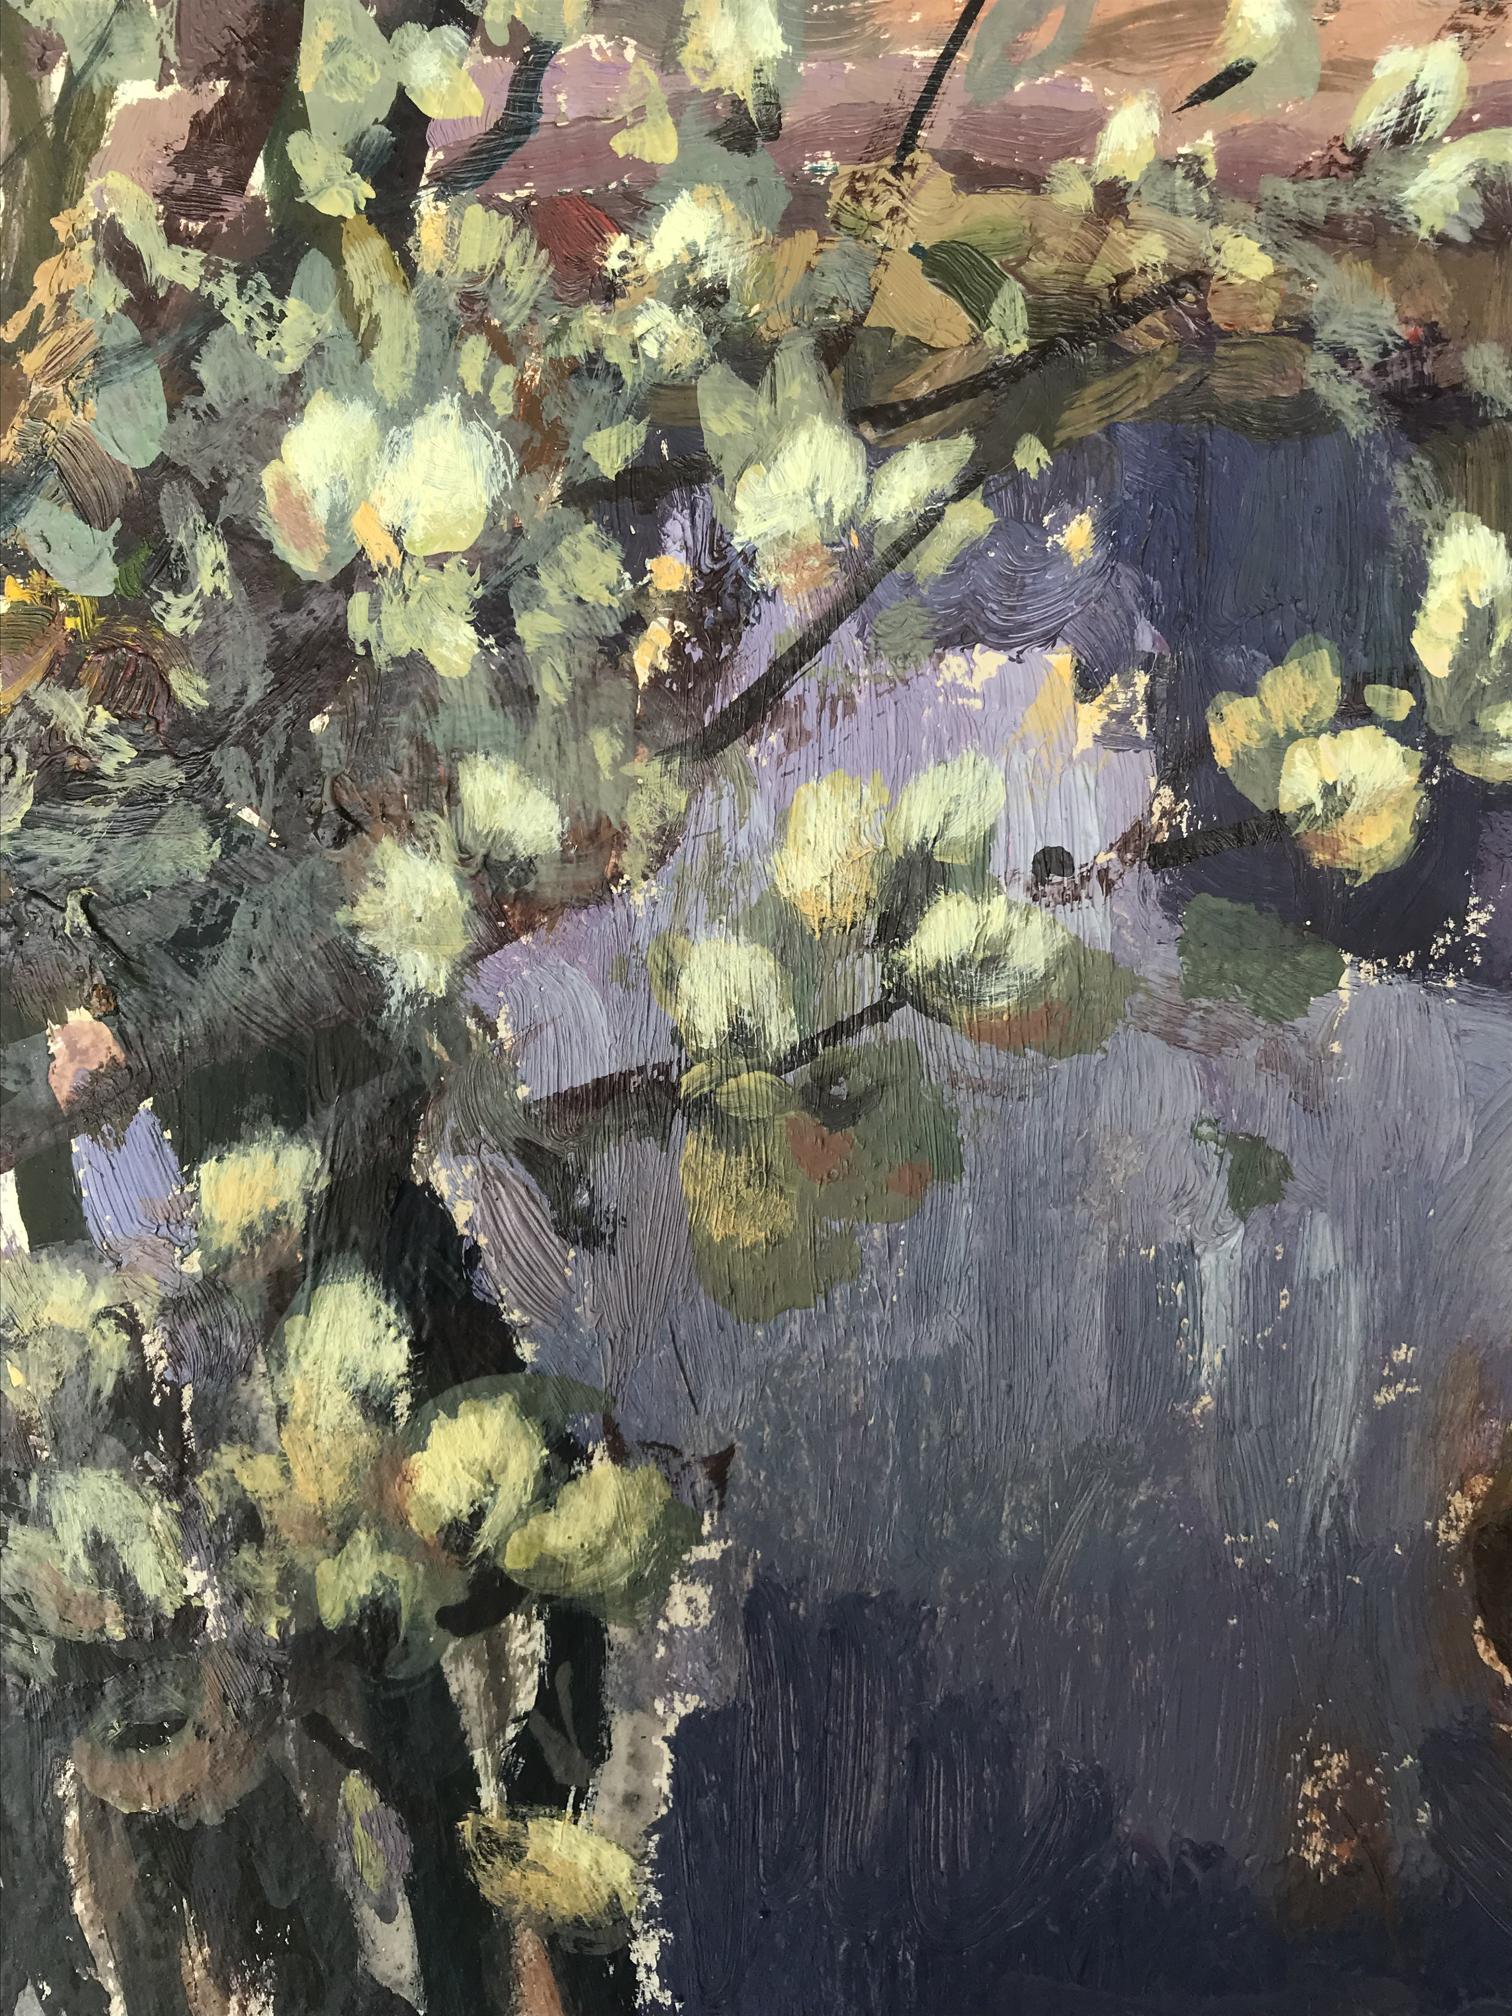 Vladimir Batrakov's "Blooming Willow by the River" in oil